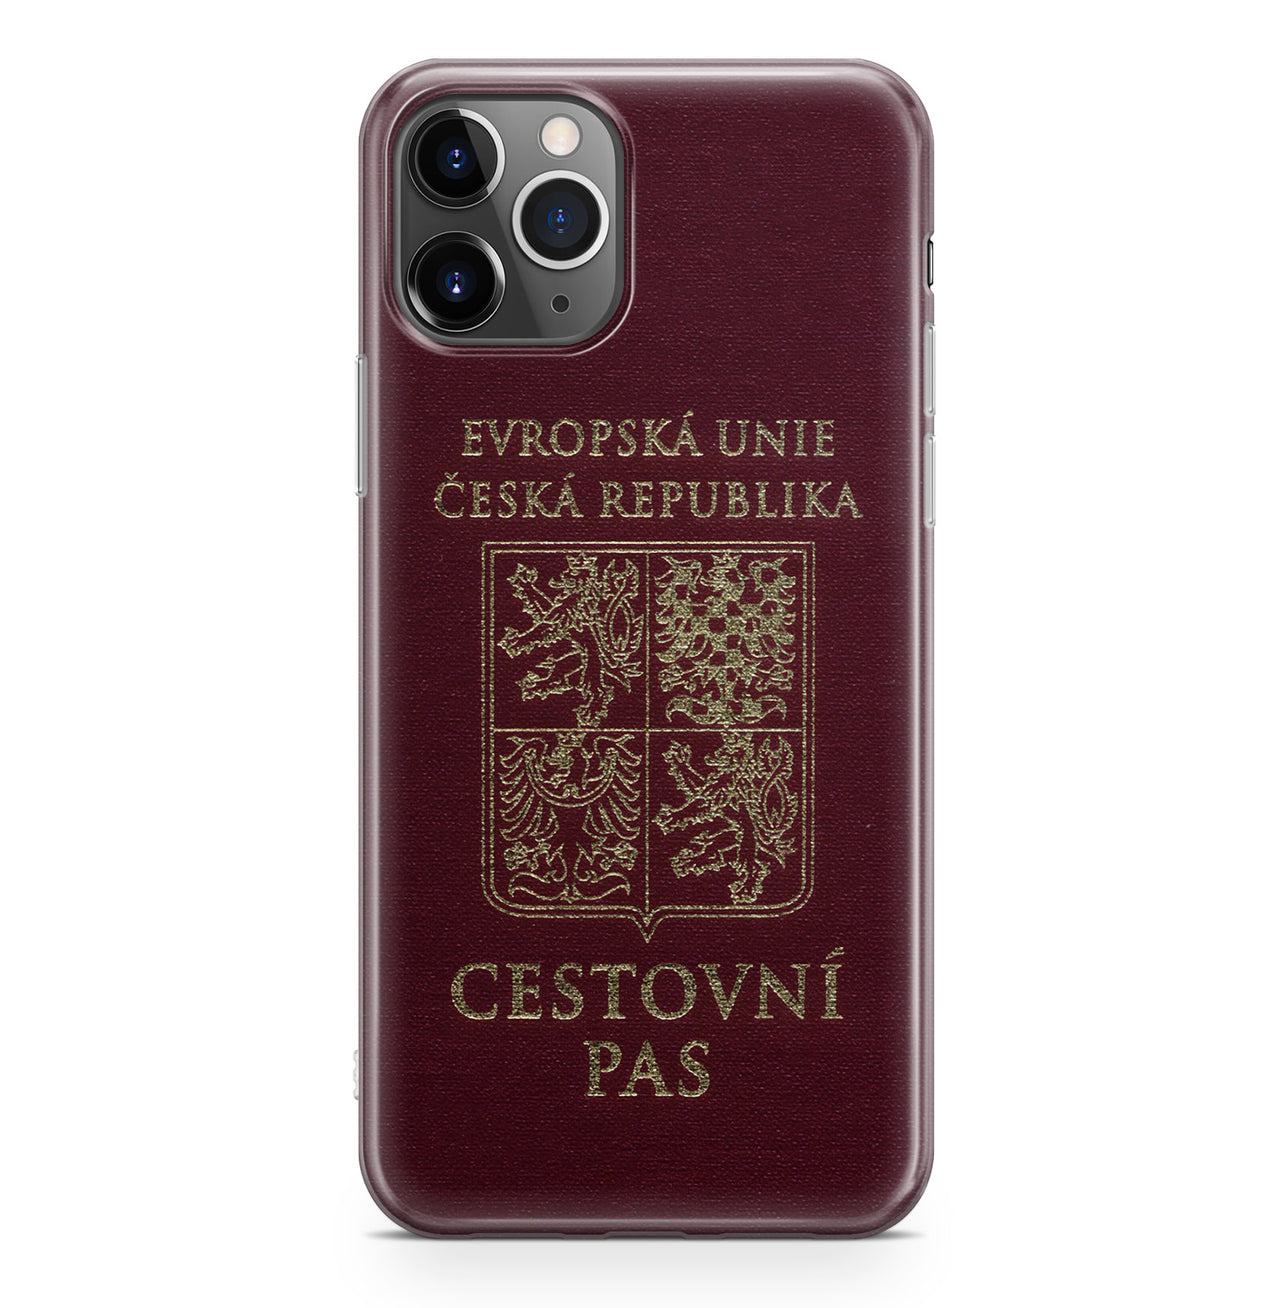 Czech Republic (Czechia) Passport Designed iPhone Cases